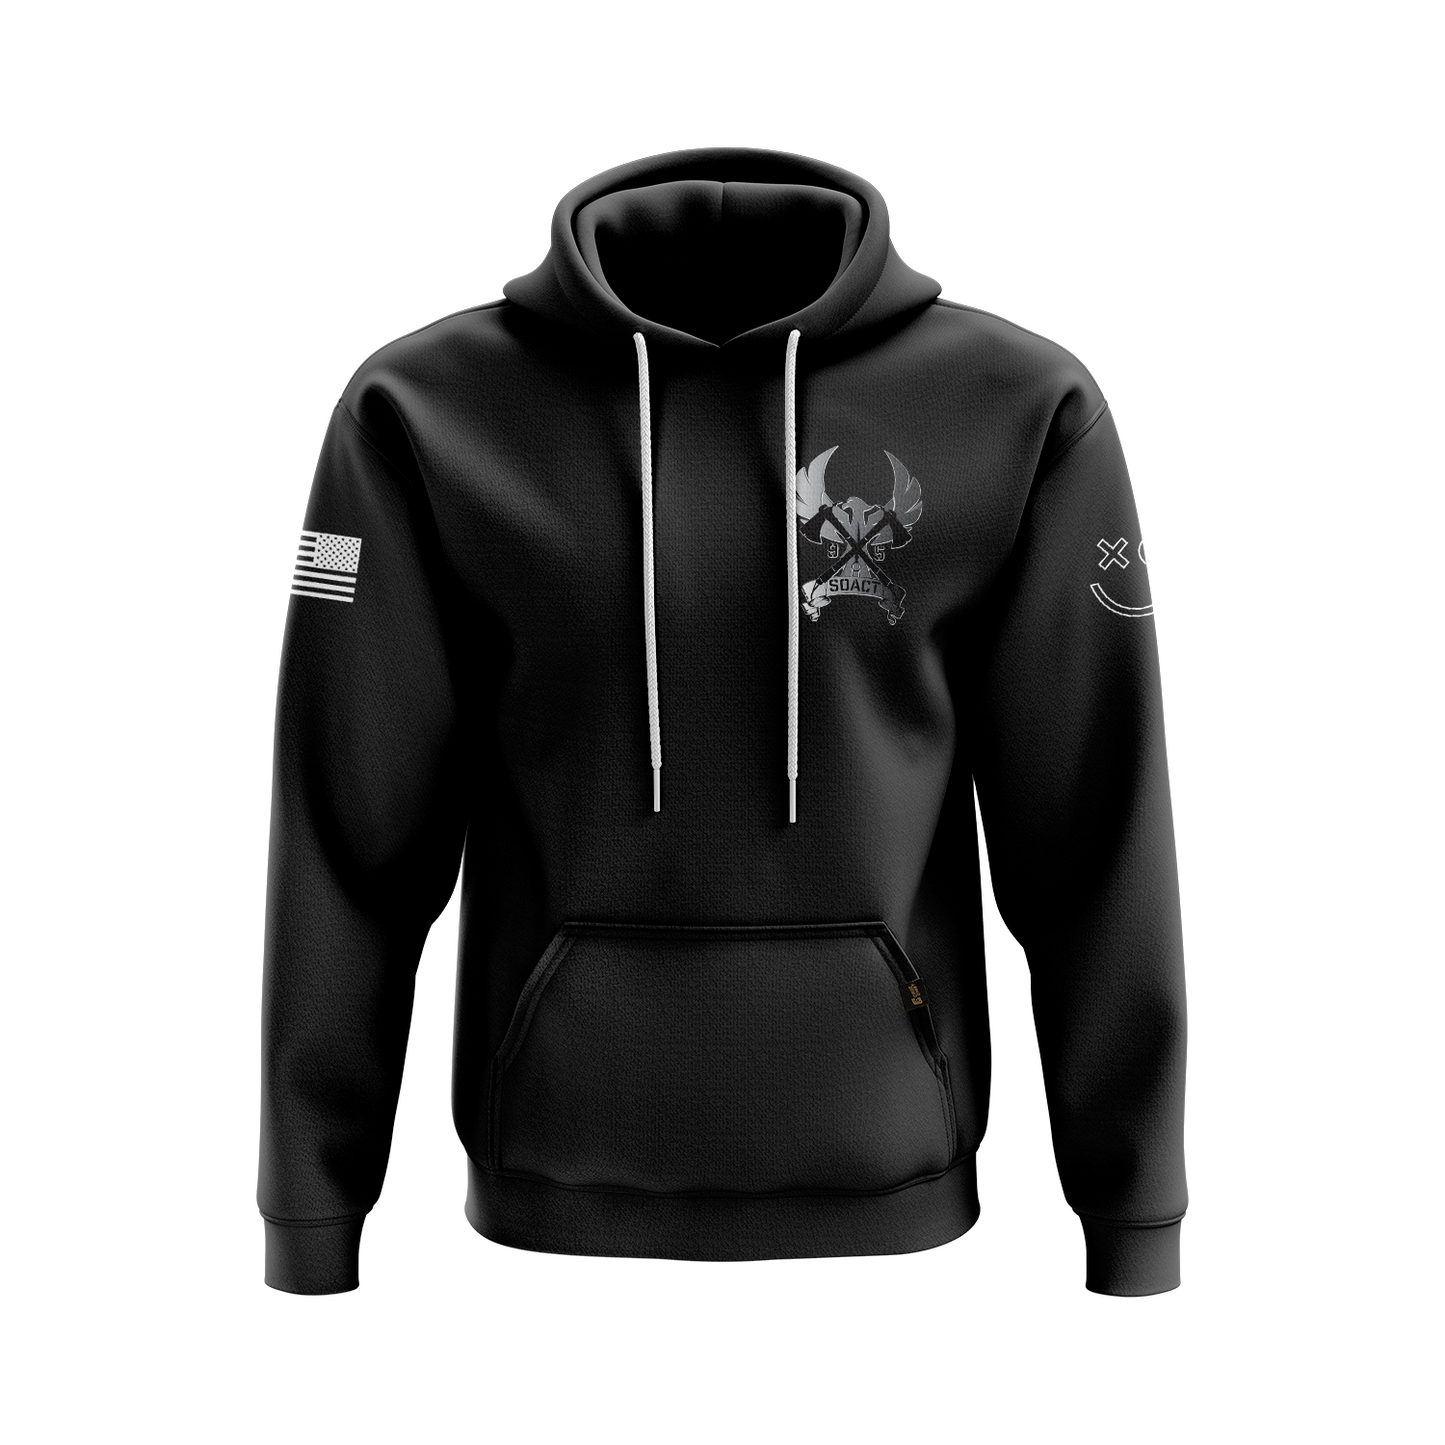 AJJ pullover hoodie SOACT Collaboration, black